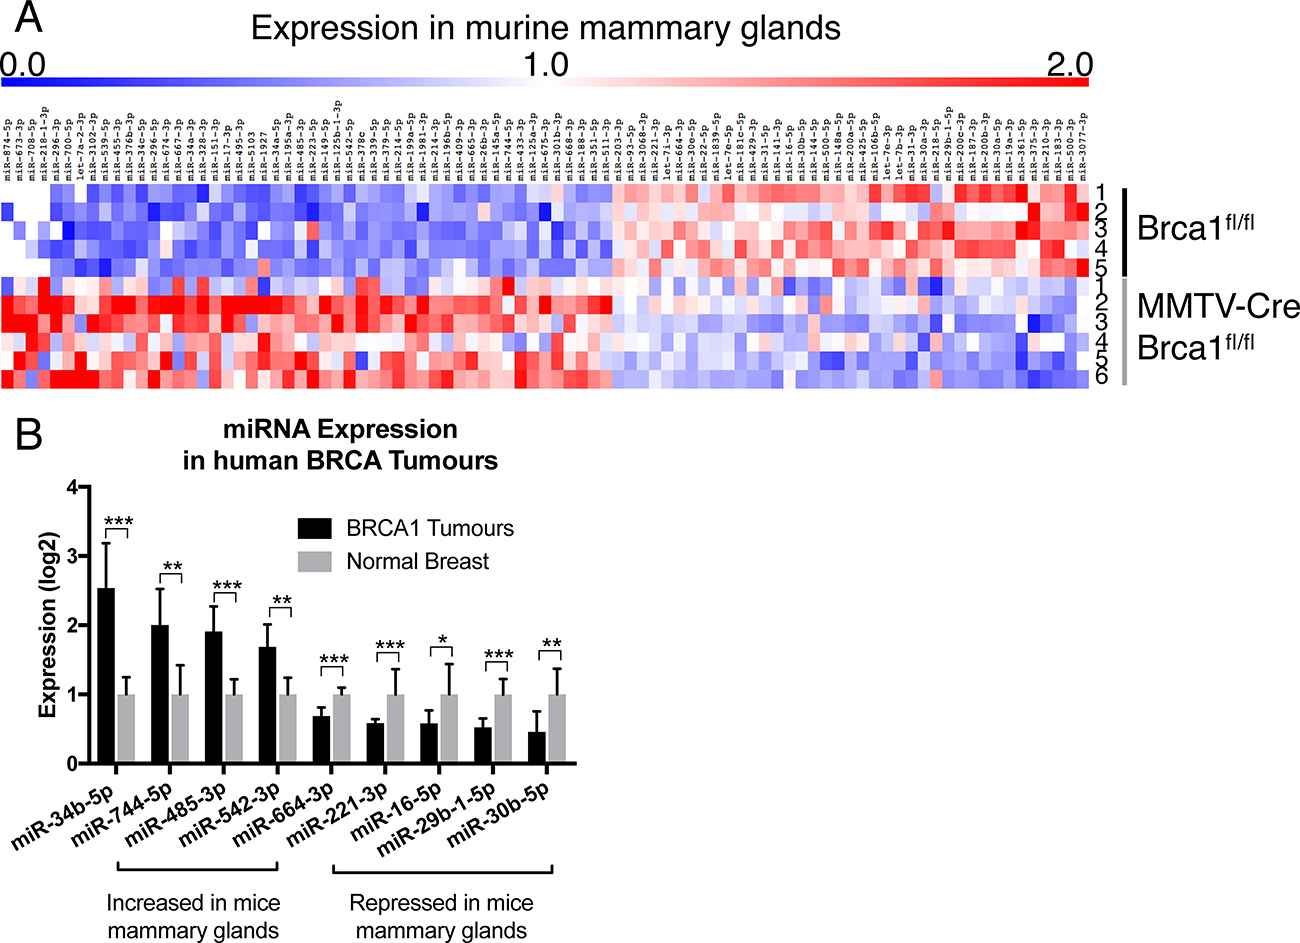 Brca1 deregulates miRNA expression in the mammary gland.